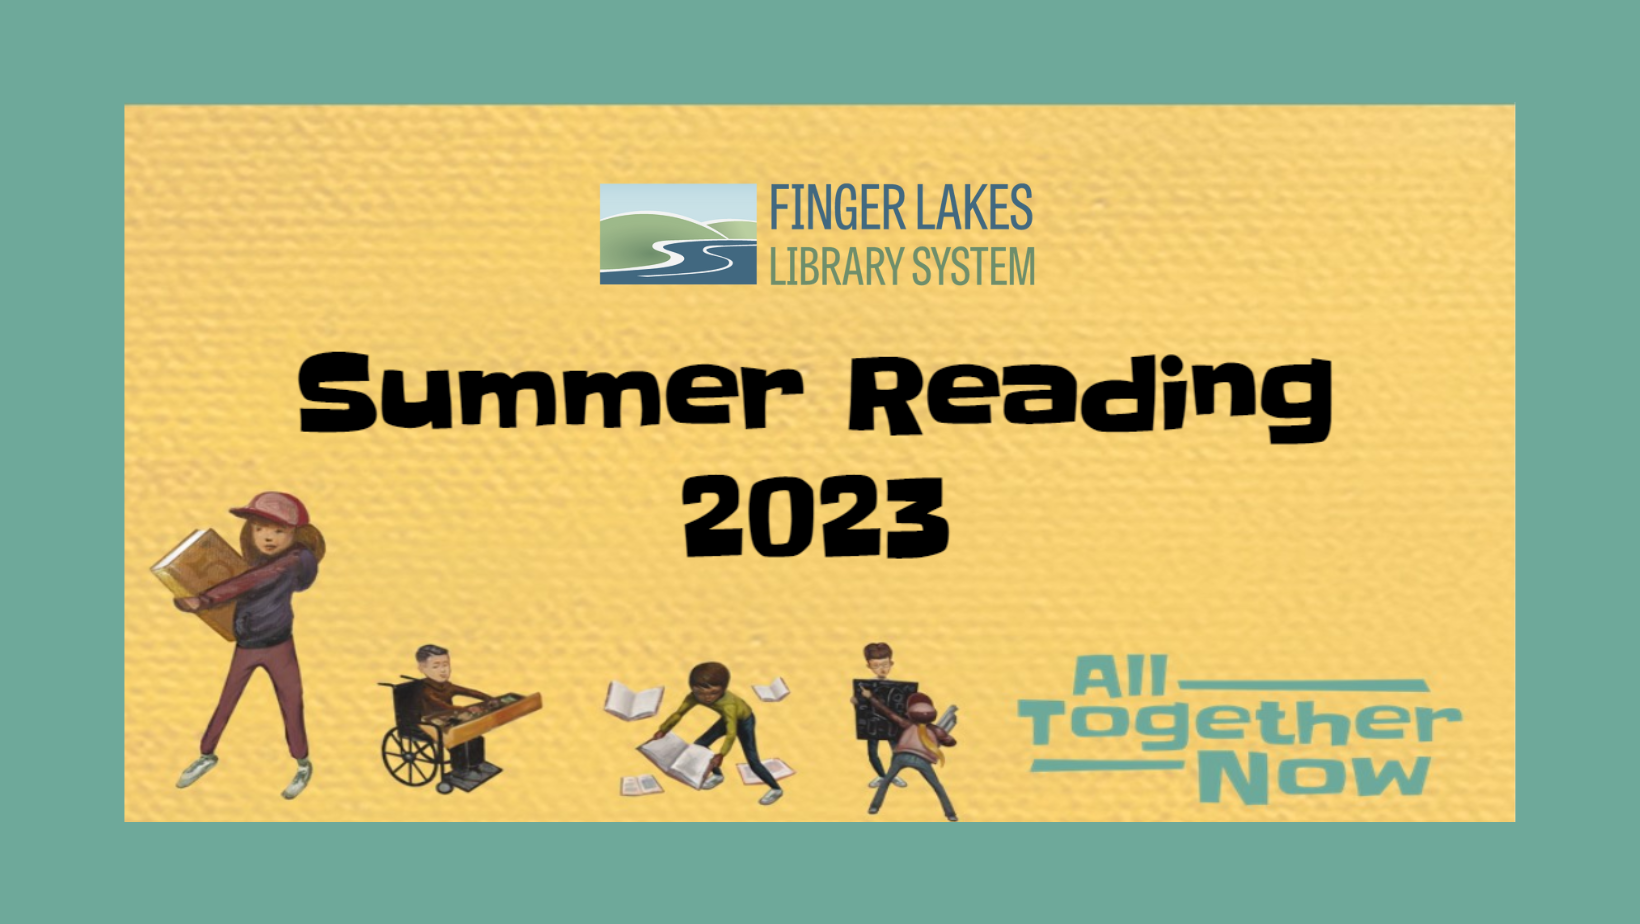 2023 Summer Reading Program  City of San Diego Official Website